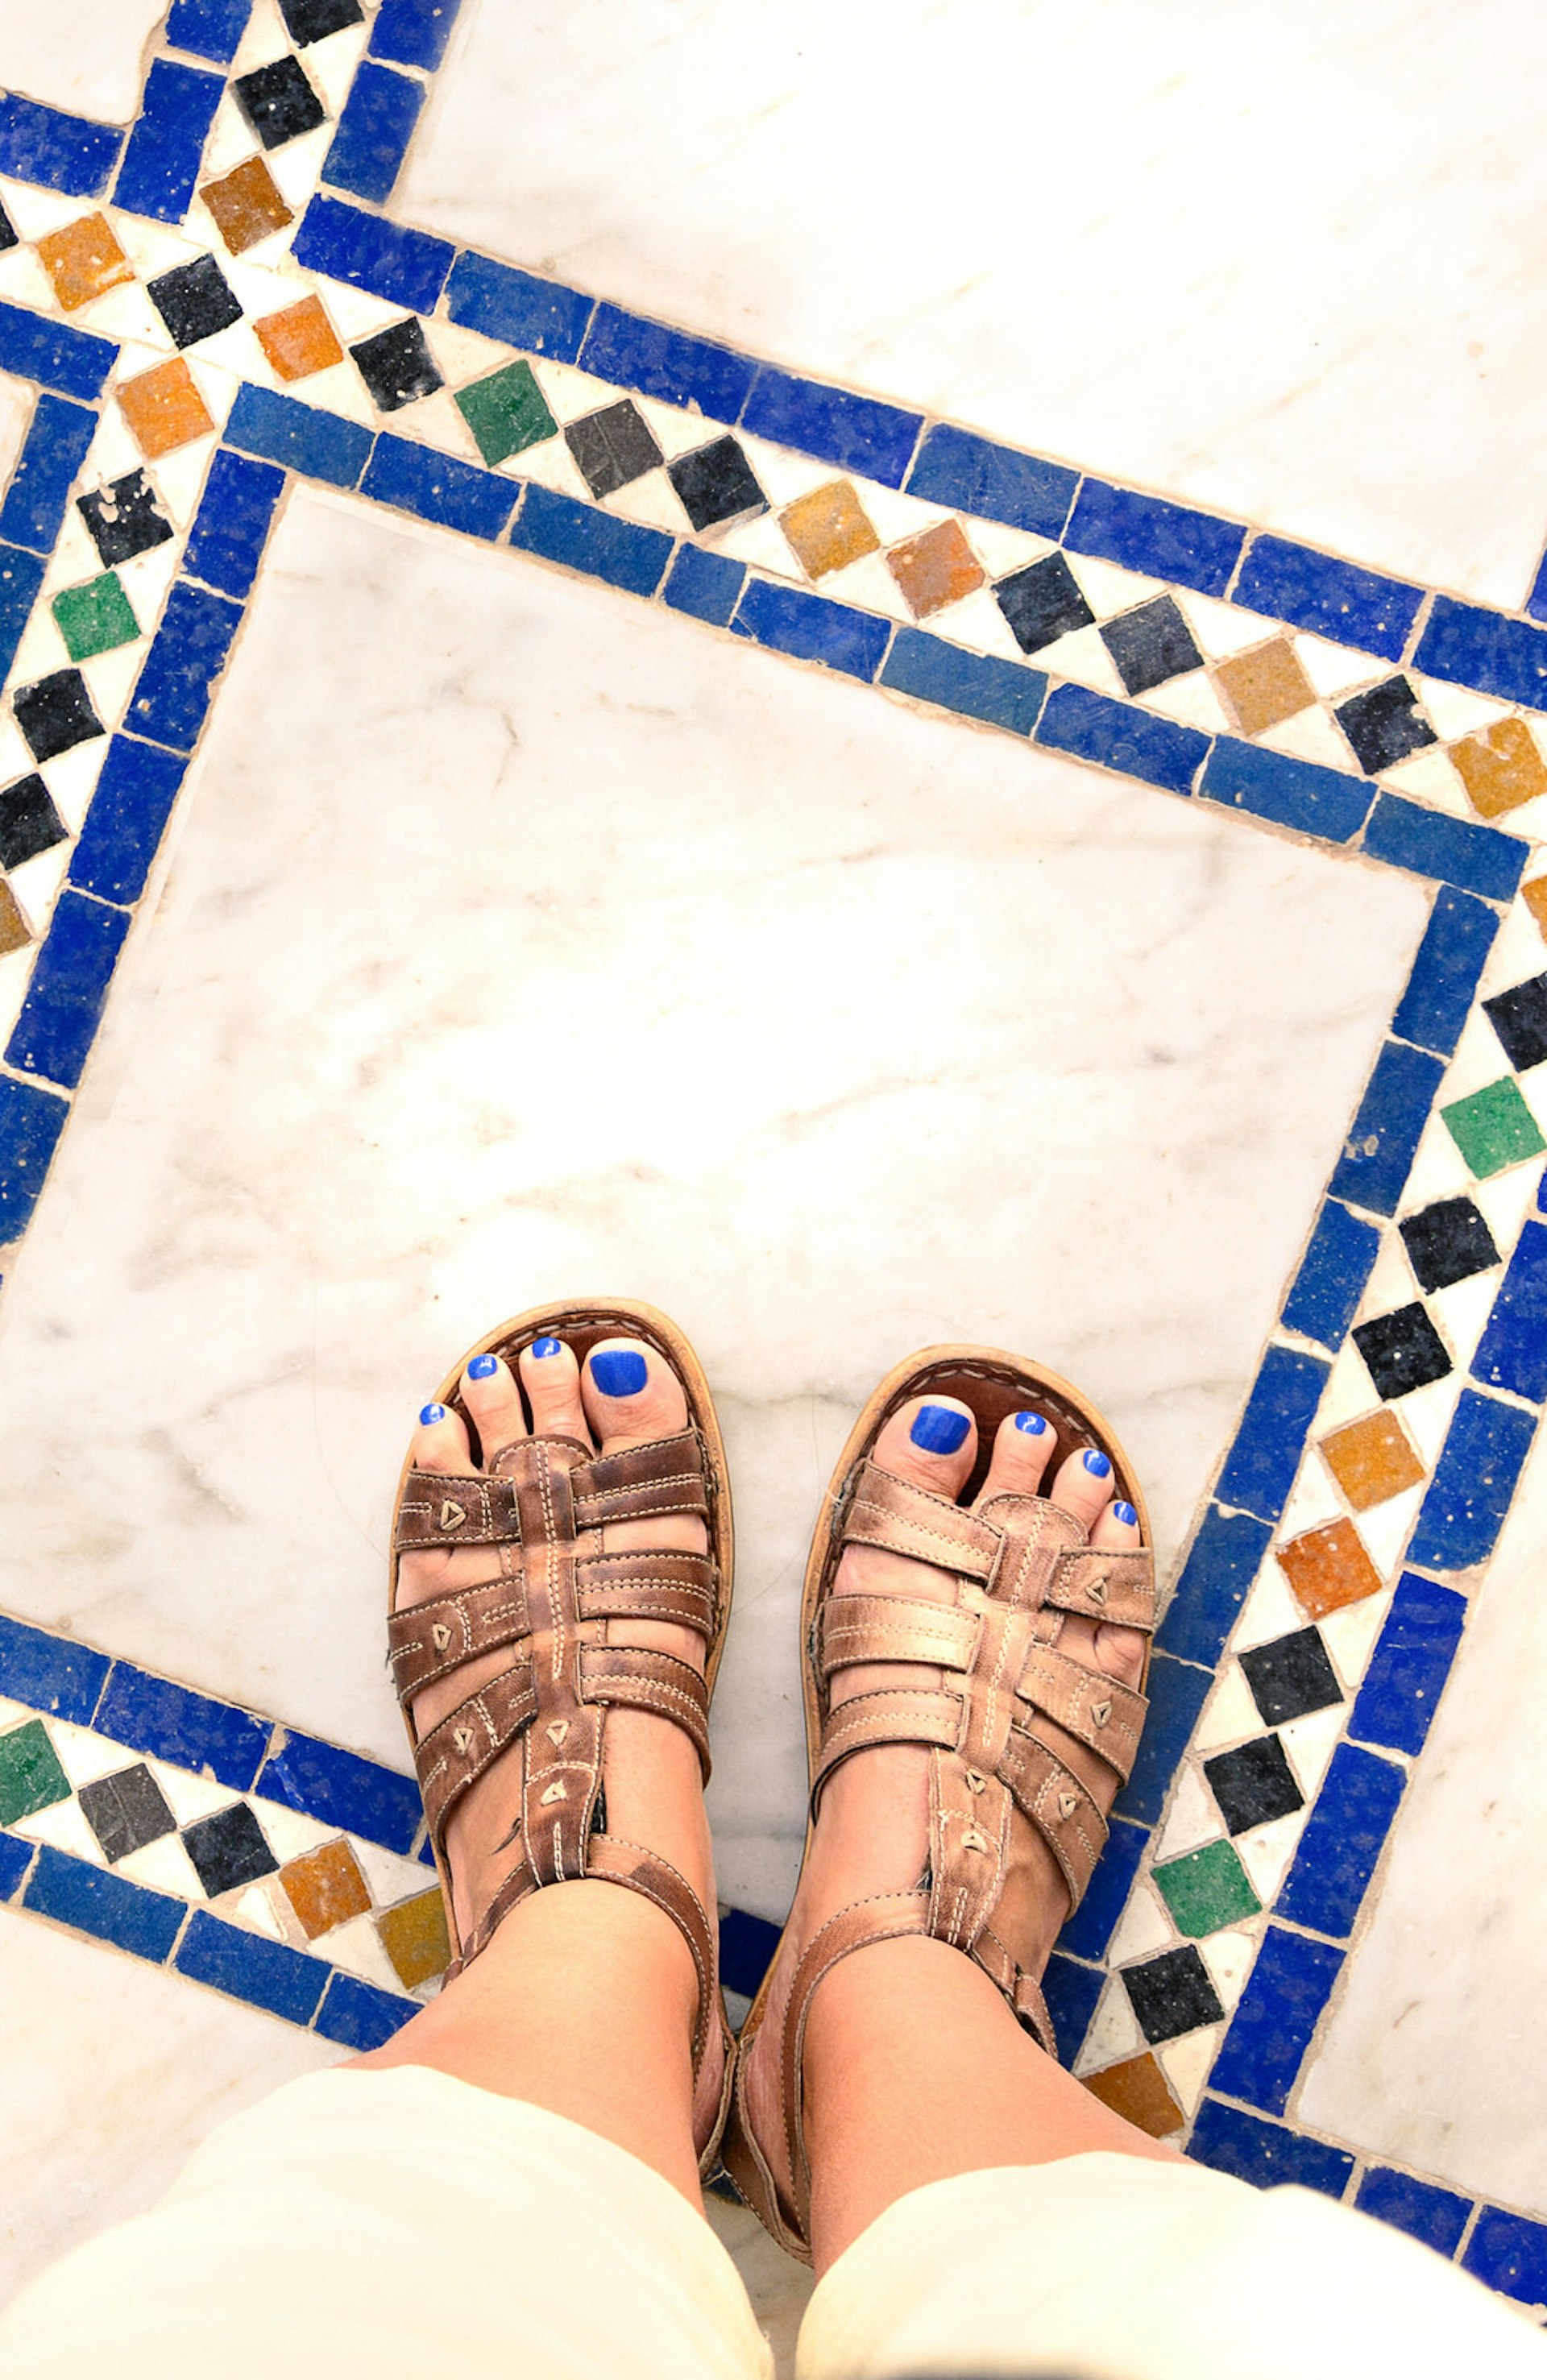 Sandals on North African tiles. Image by Ser Borakovskyy / Shutterstock